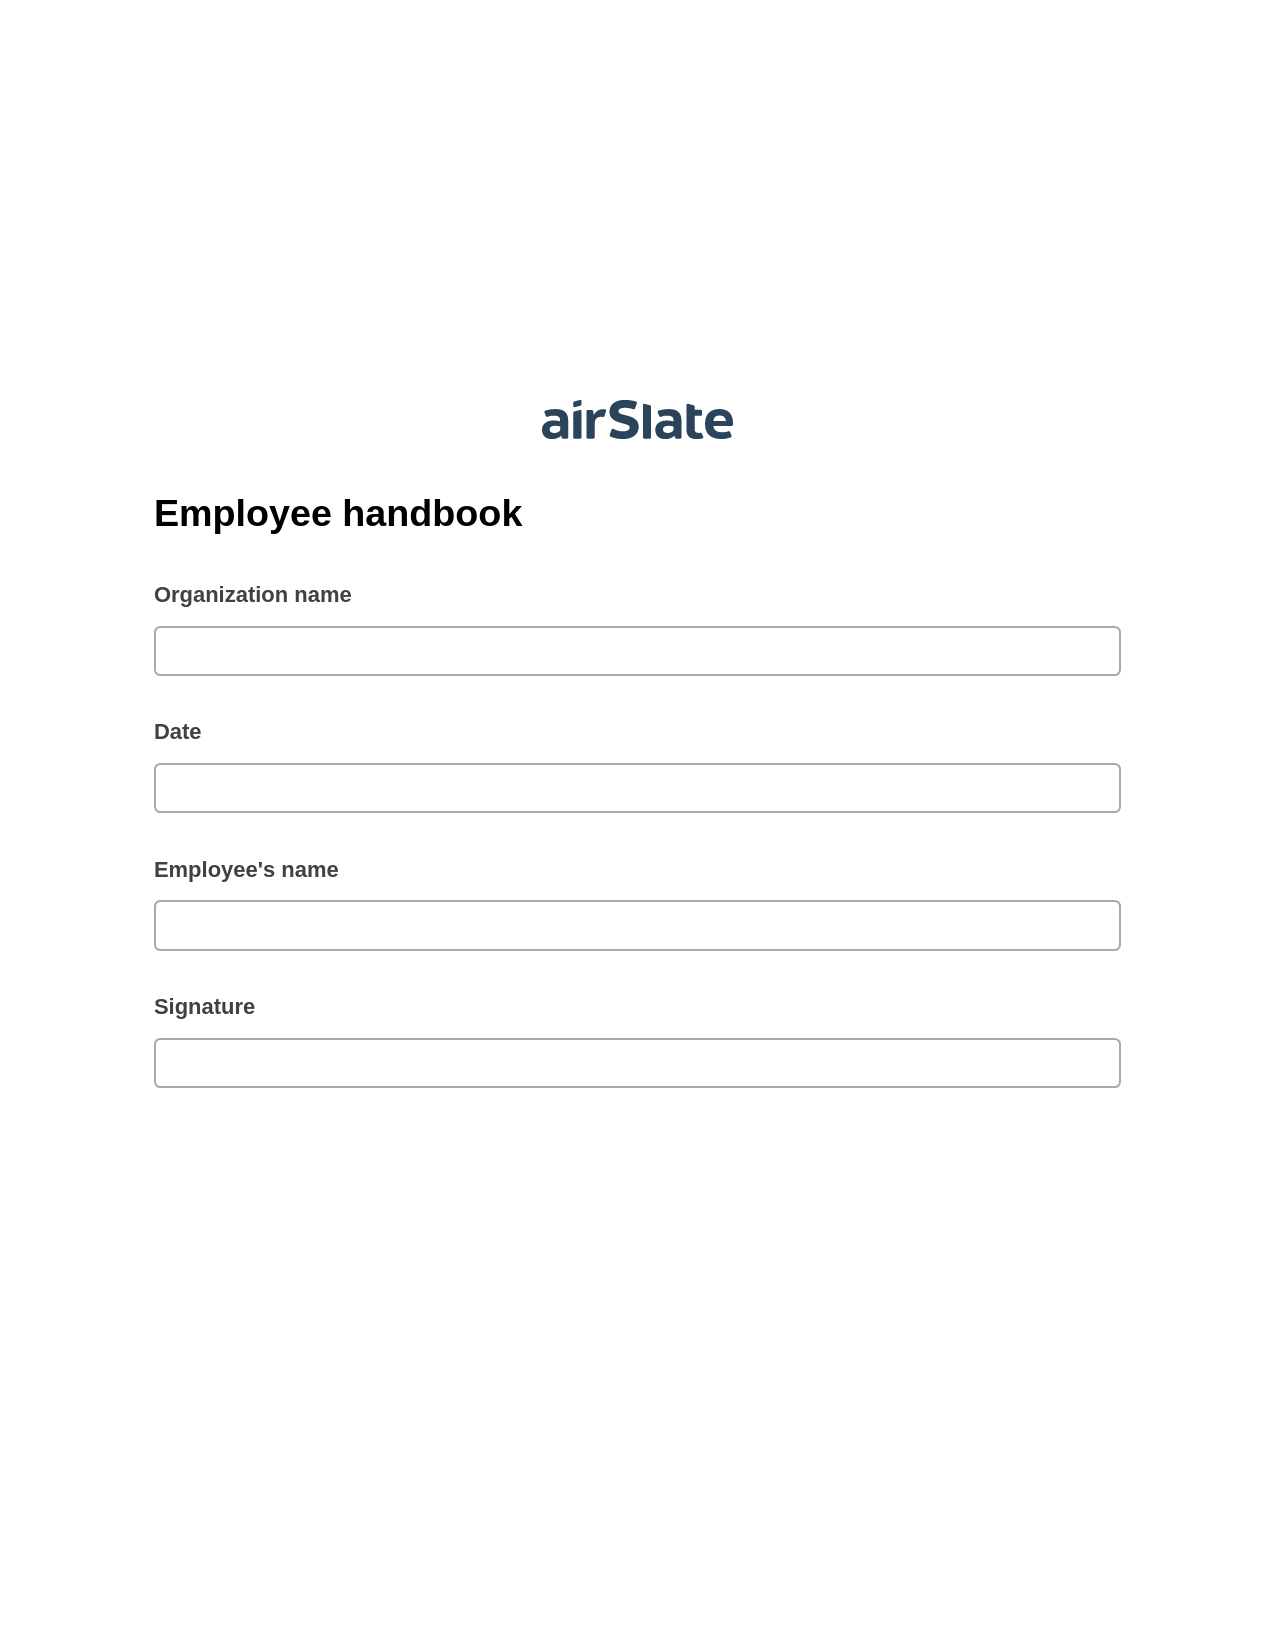 Employee handbook Pre-fill from CSV File Bot, Add Tags to Slate Bot, Box Bot